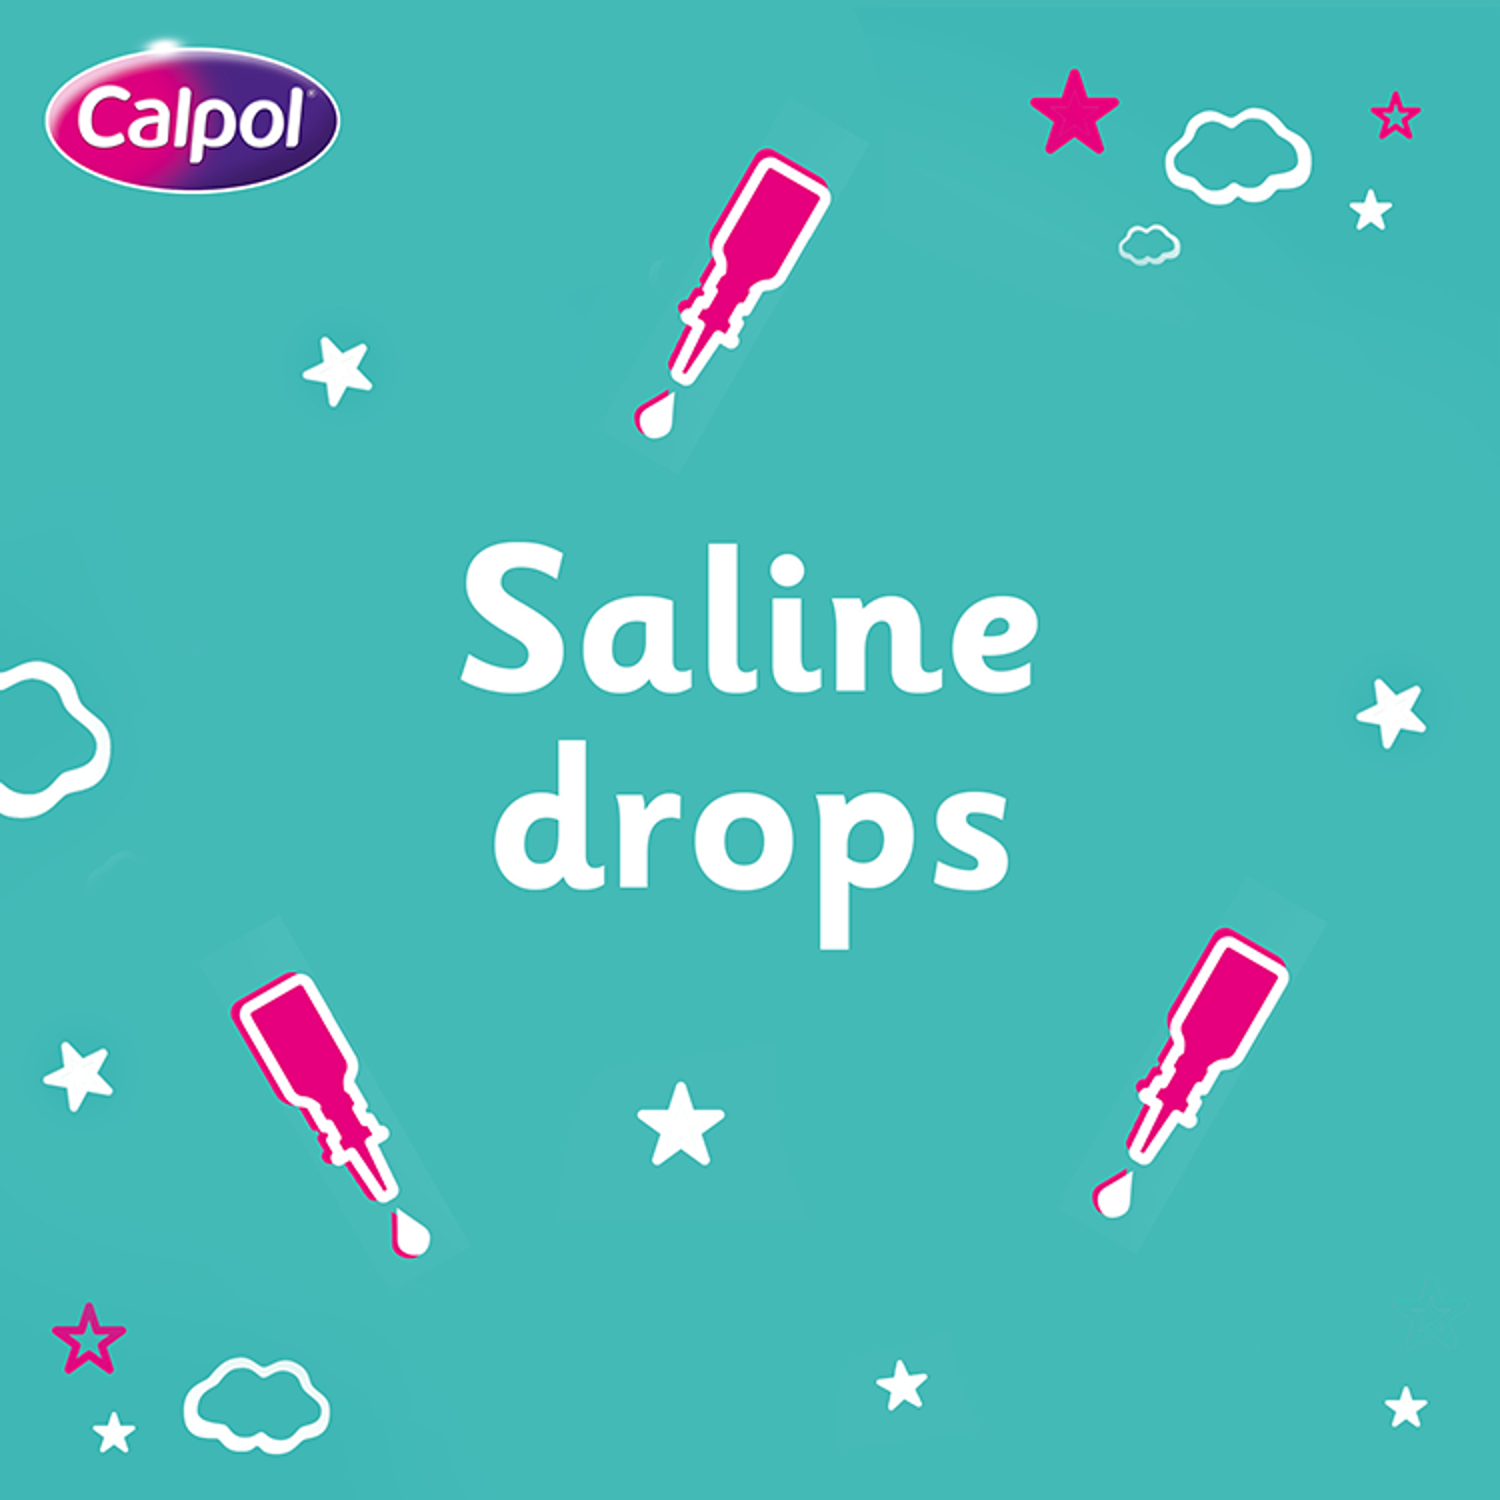 Calpol Soothe & Care Saline Nasal Drops